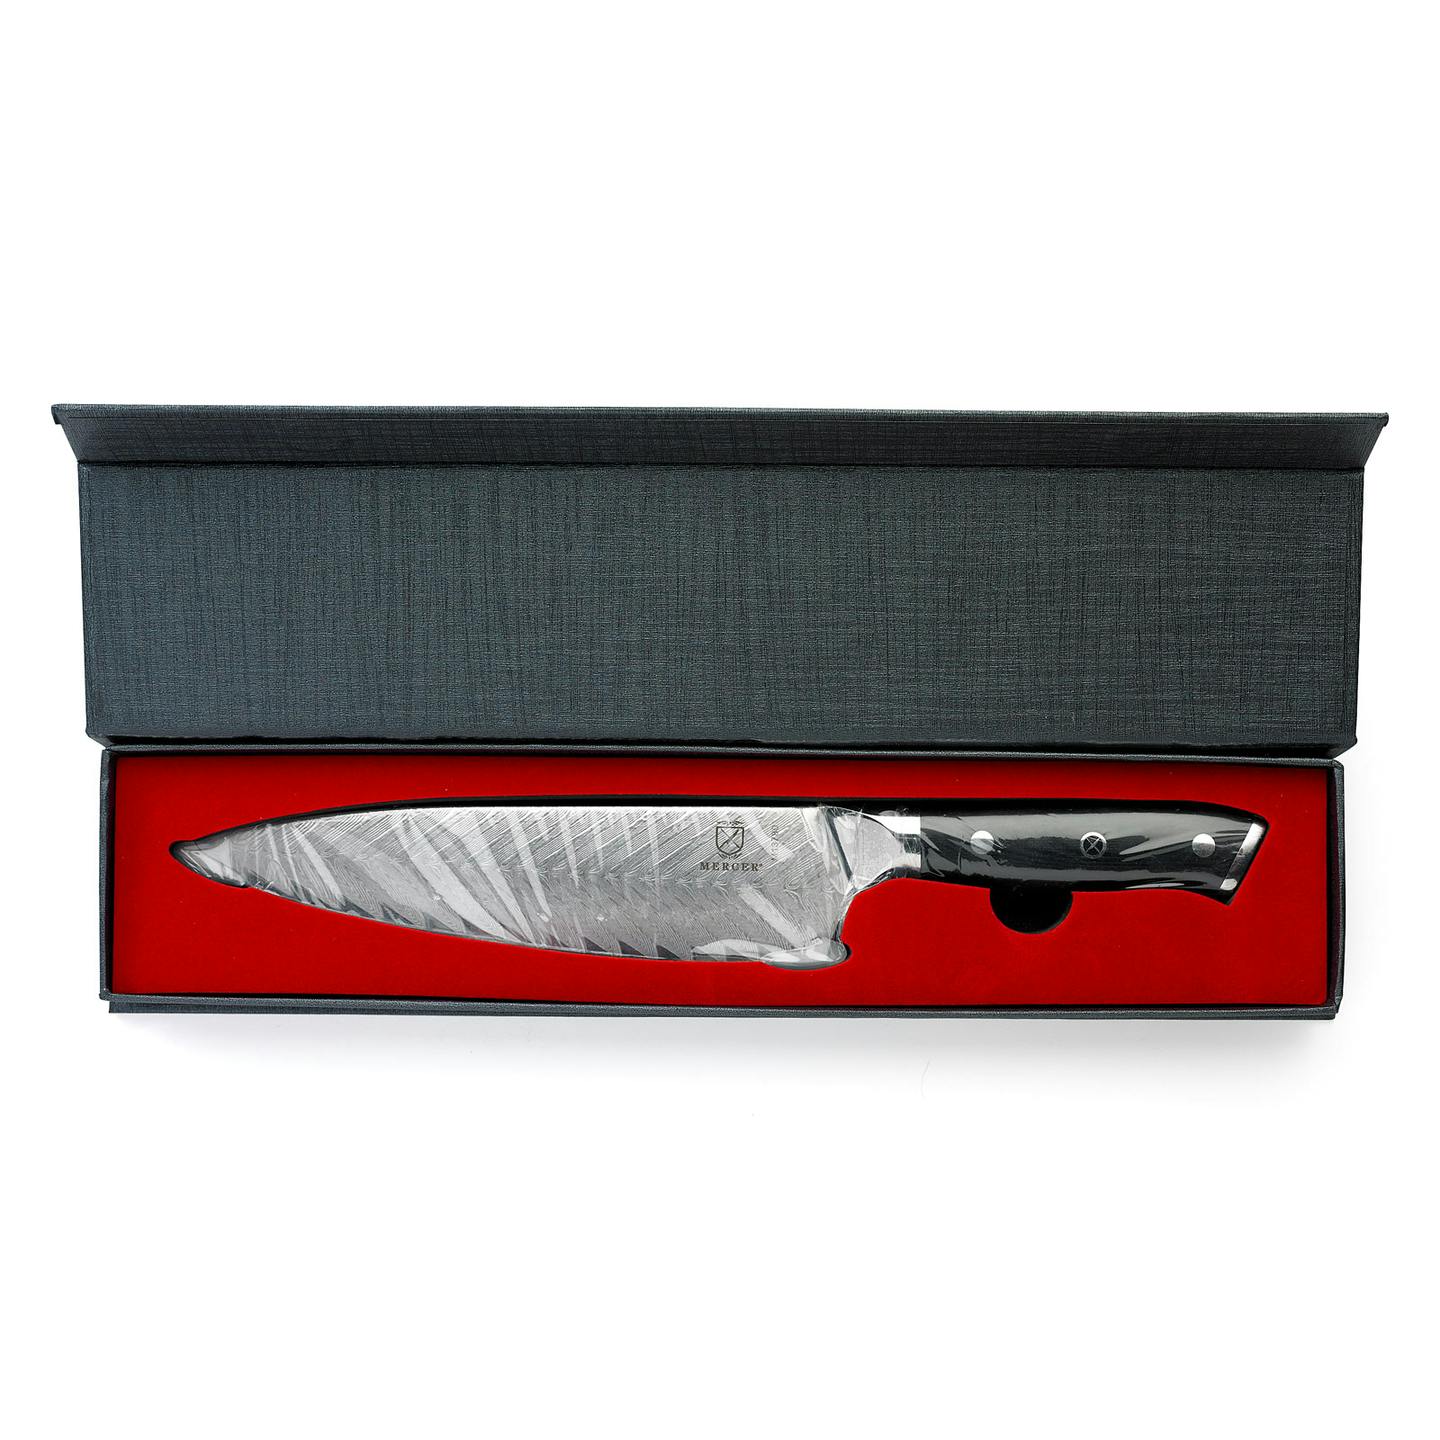 Mercer Culinary M13780 Premium Grade Super Steel, 8" Chef's Knife w/Leaf Pattern Blade, G10 Handle